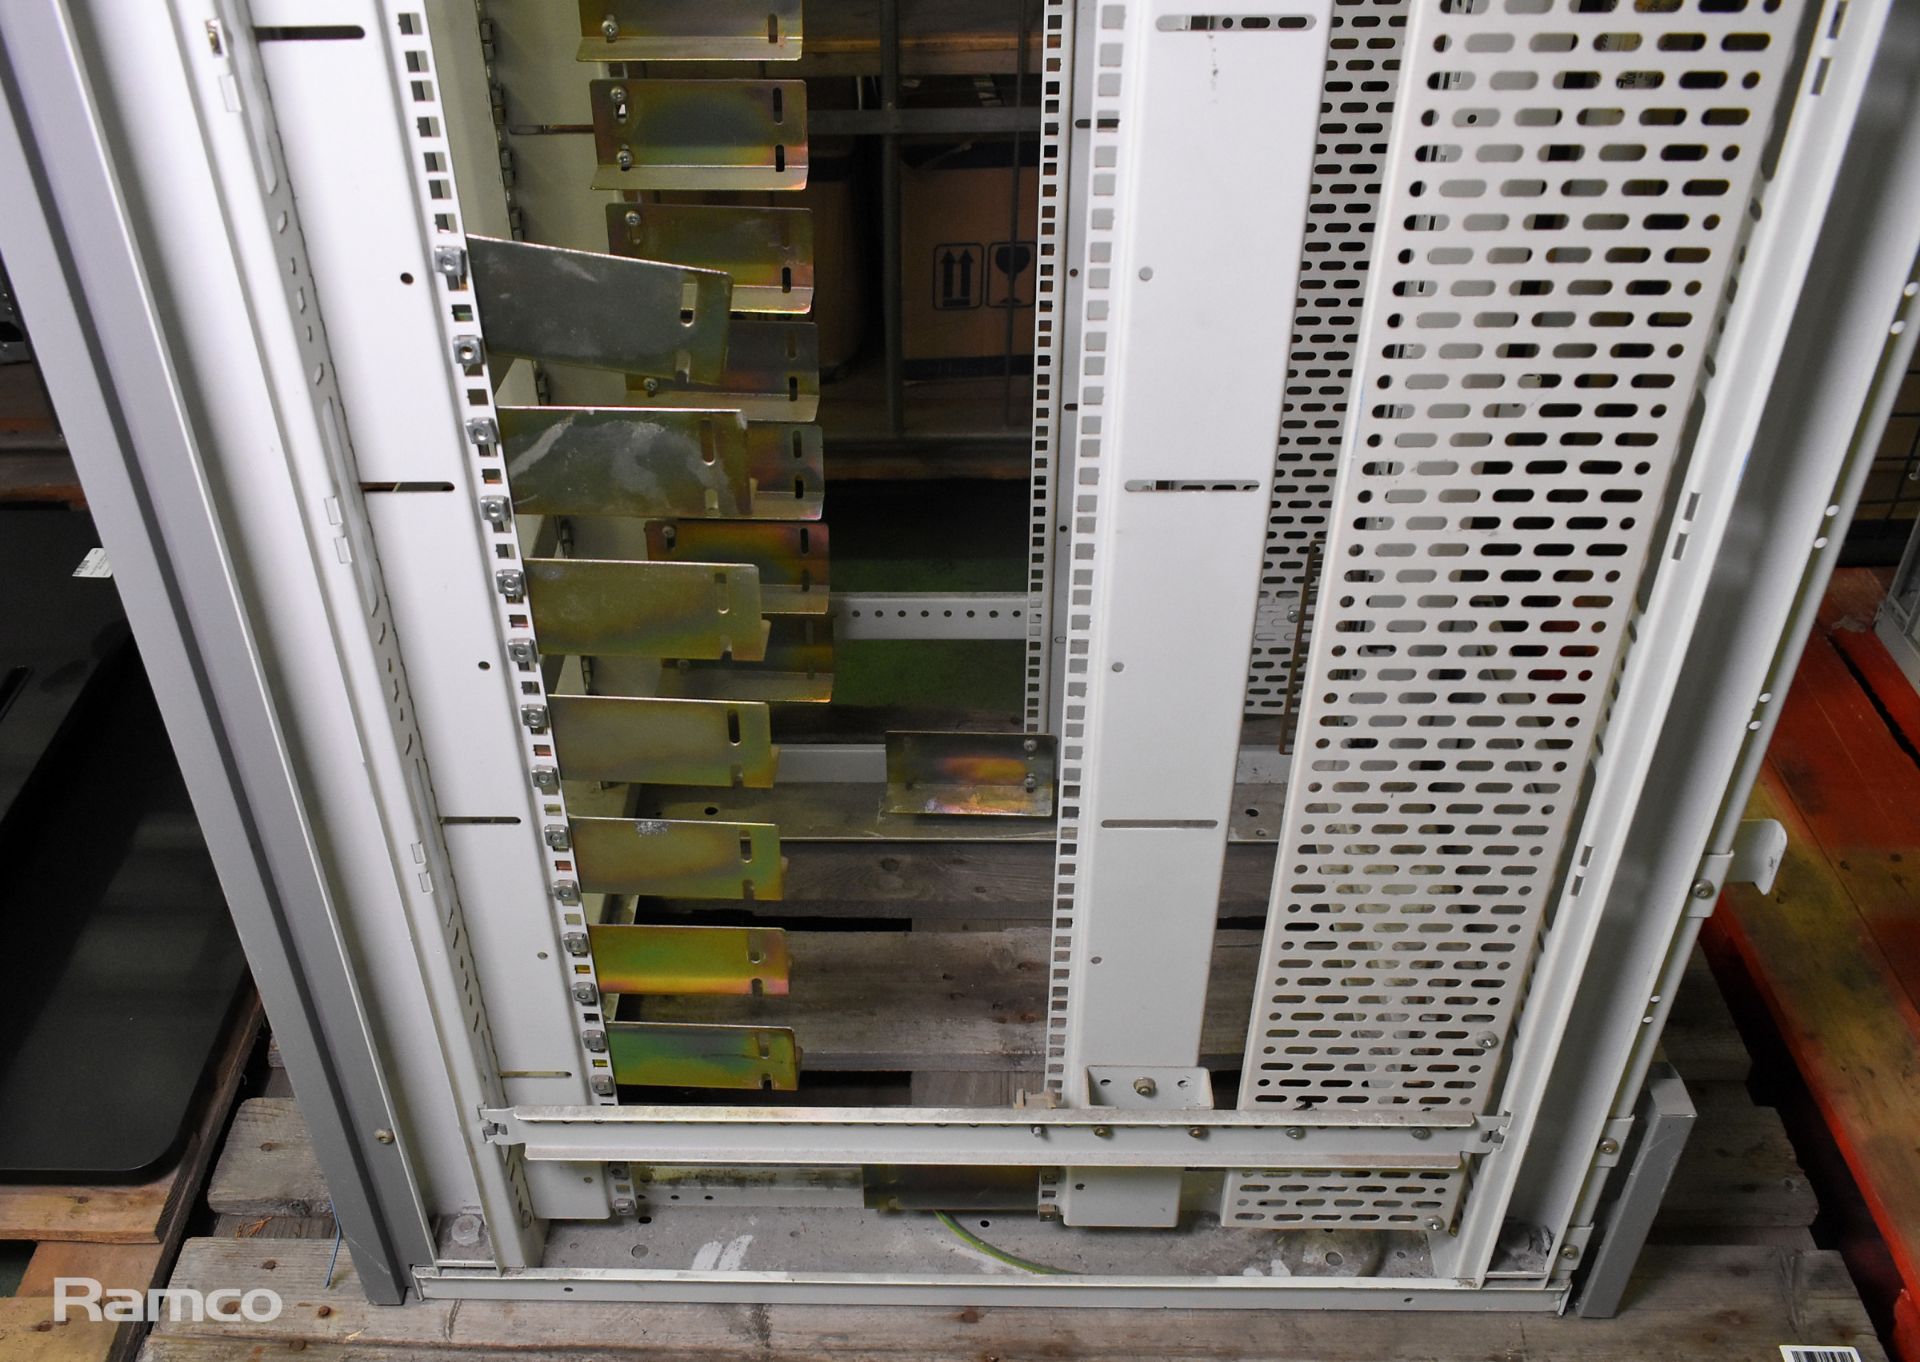 46U server rack chassis - W 590 x D 870 x H 2200mm, 46U server rack chassis - W 590 x D 870 x H 2200 - Image 5 of 6